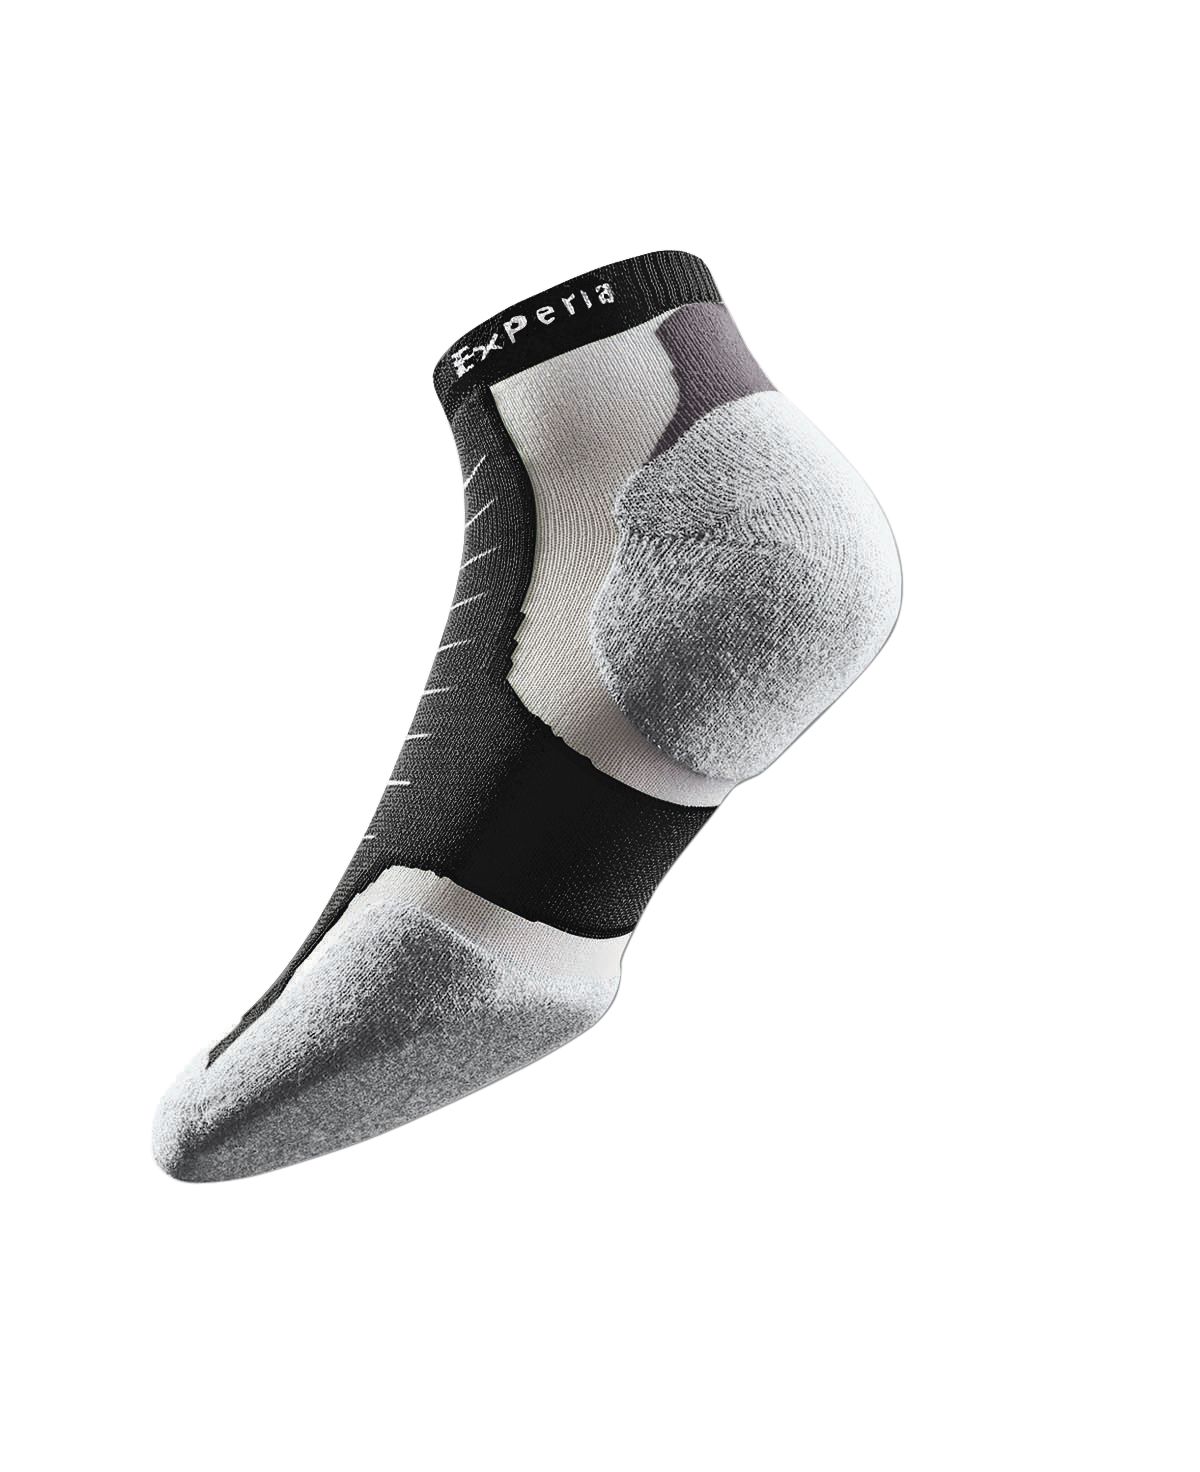 Thorlos Experia Thin Padded Multisport Low Cut Sock